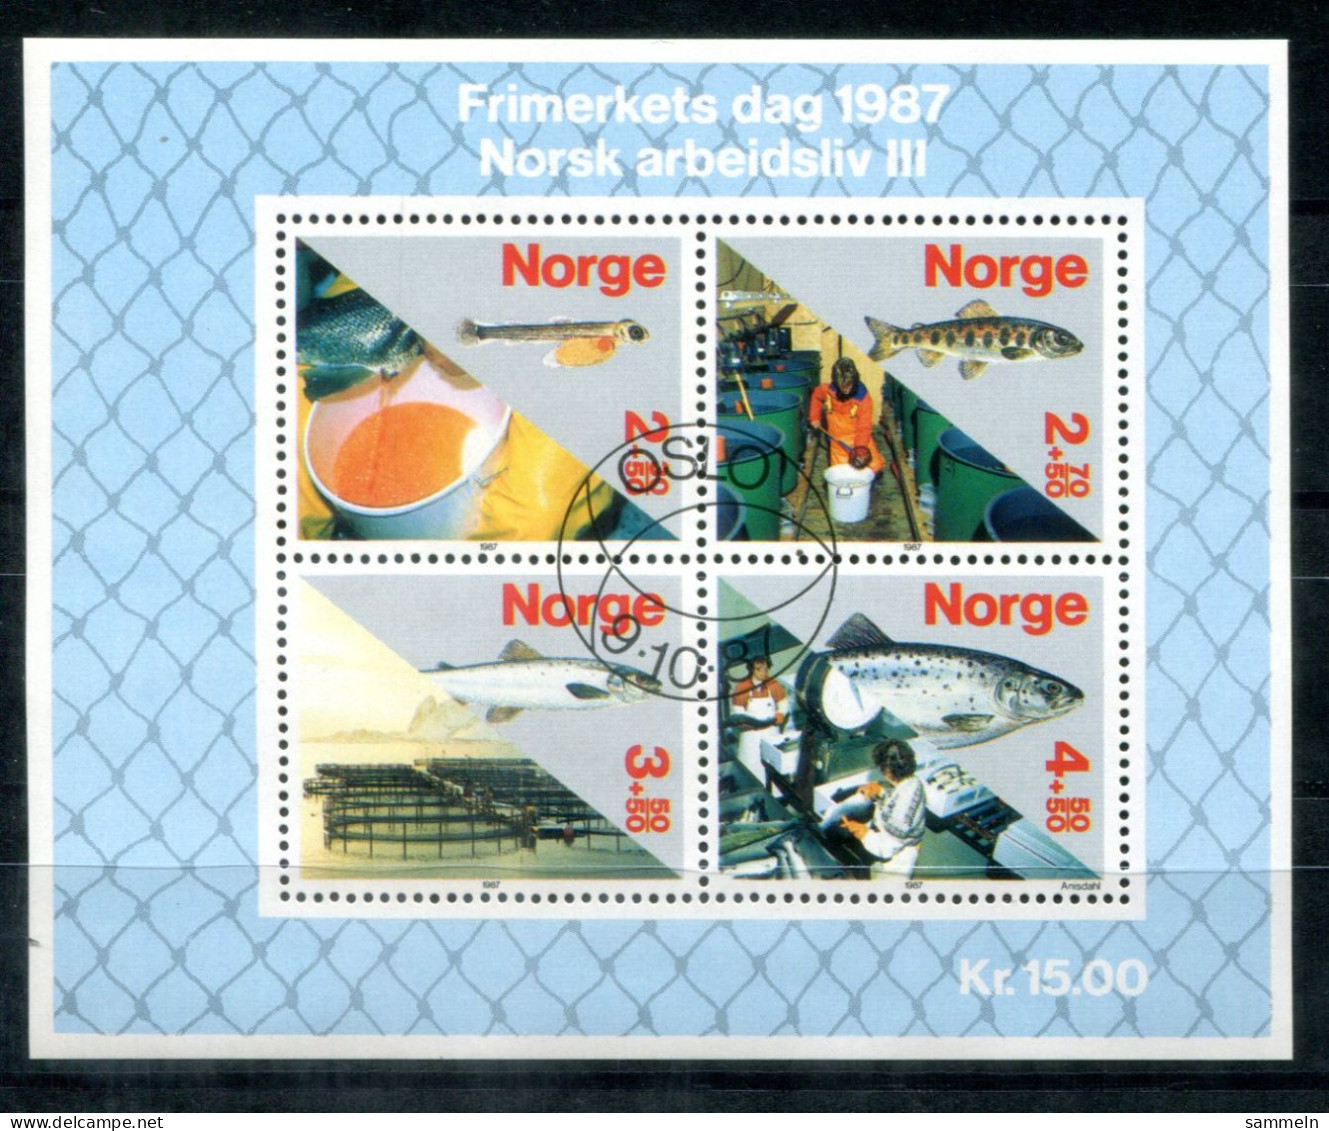 NORWEGEN Block 8, Bl.8 Spec.FD Canc. - Sisch, Fish, Poisson - NORWAY / NORVÈGE - Blocks & Sheetlets